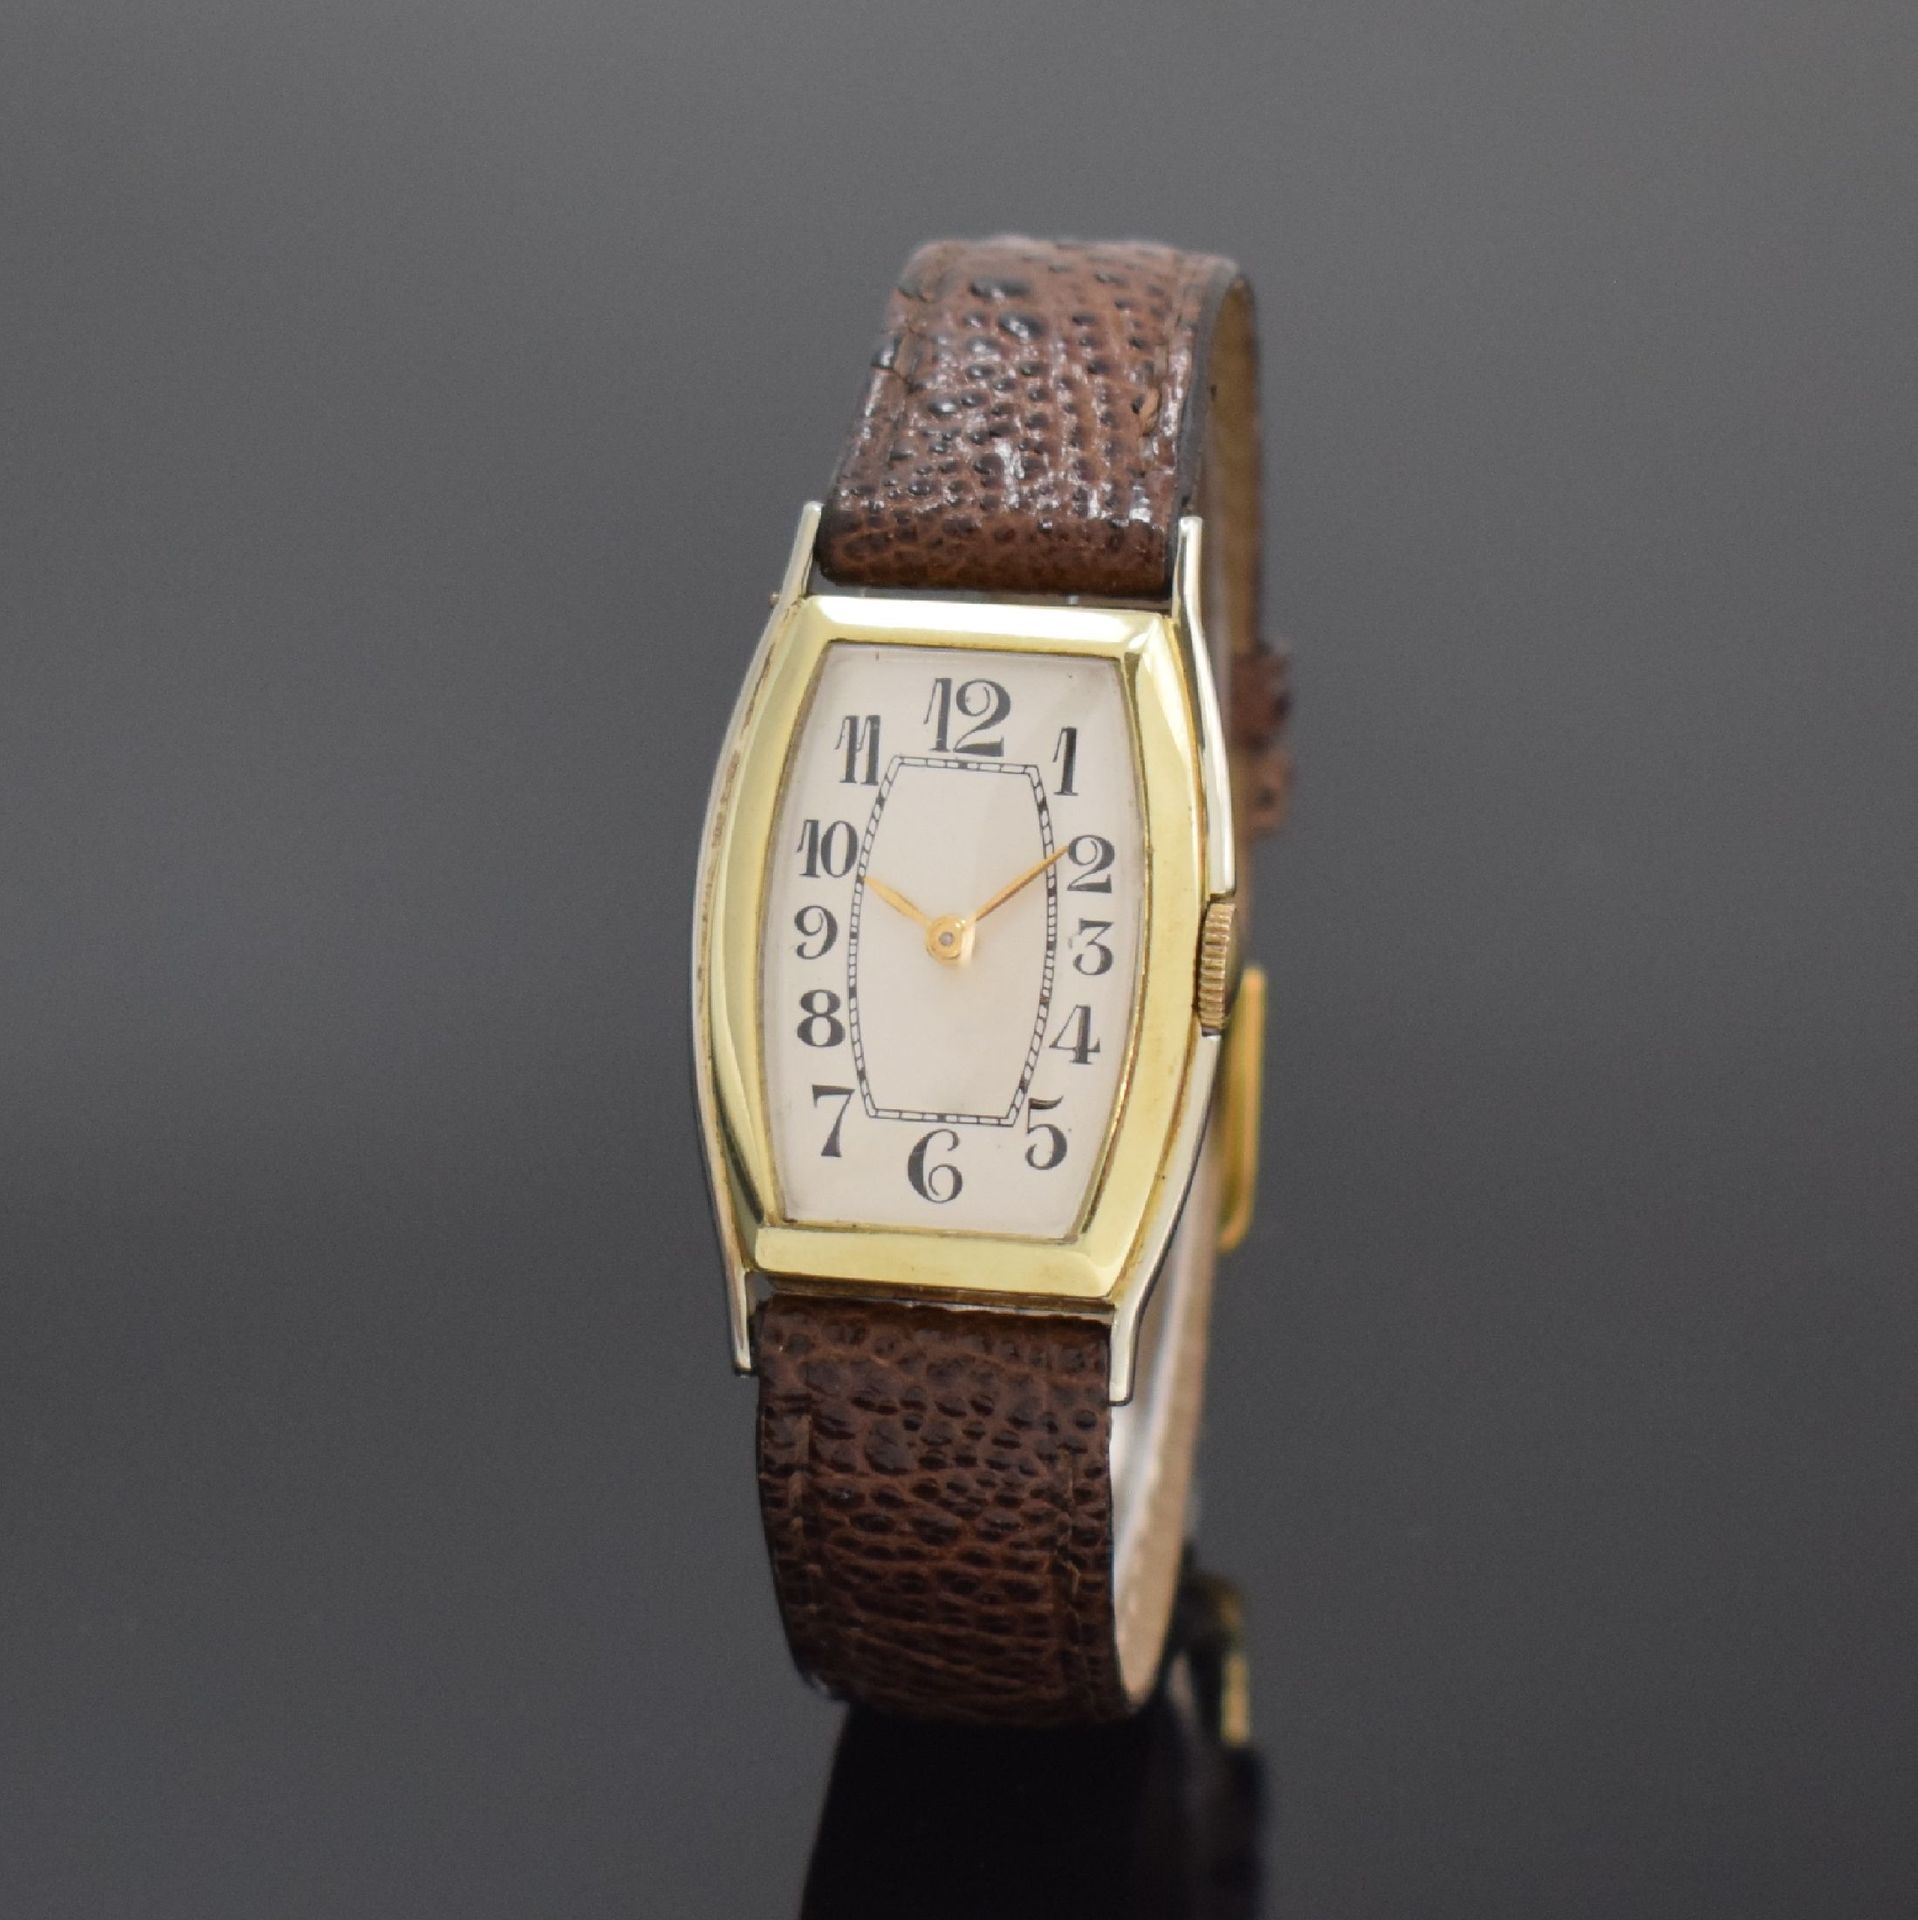 Null ORMONT WATCH CO wristwatch in 14k white/yellow gold, Switzerland / USA arou&hellip;